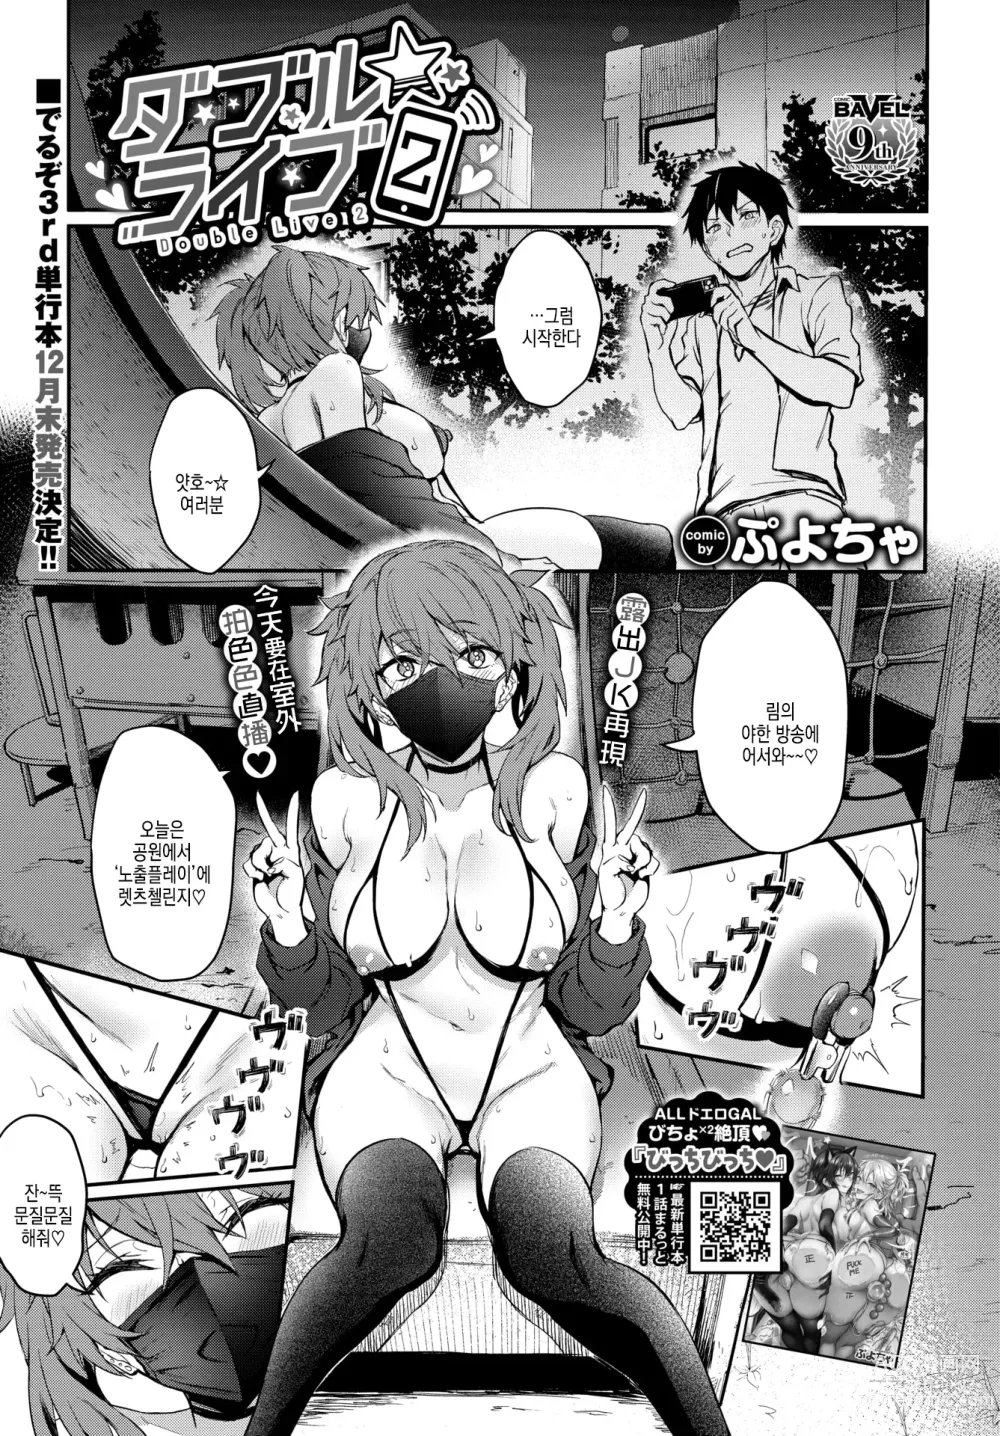 Page 1 of manga Double Live 2